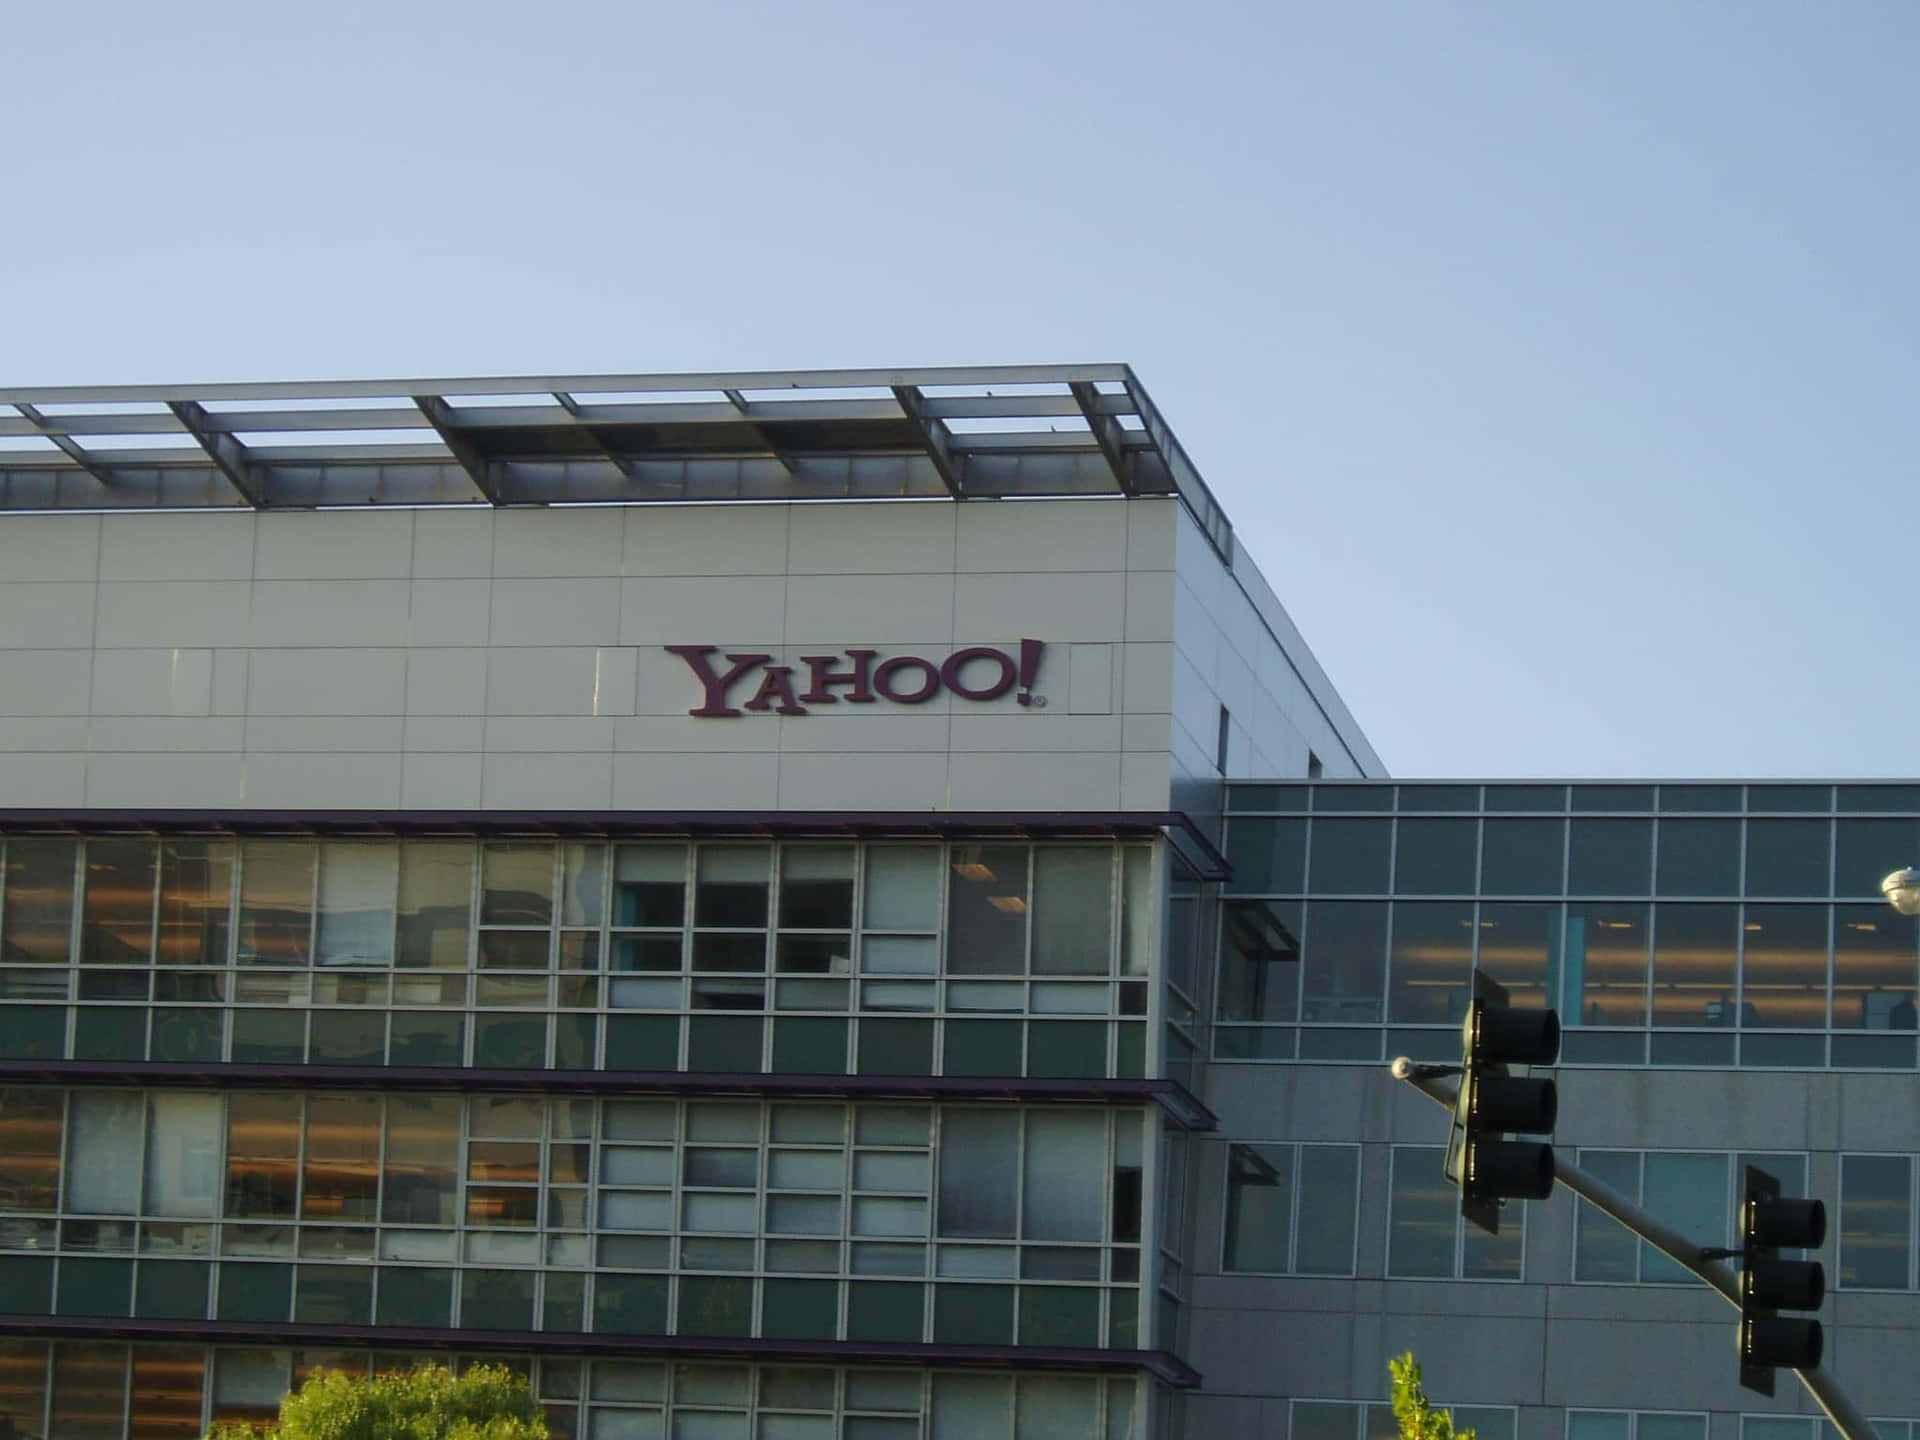 Denikoniska Yahoo-logotypen.